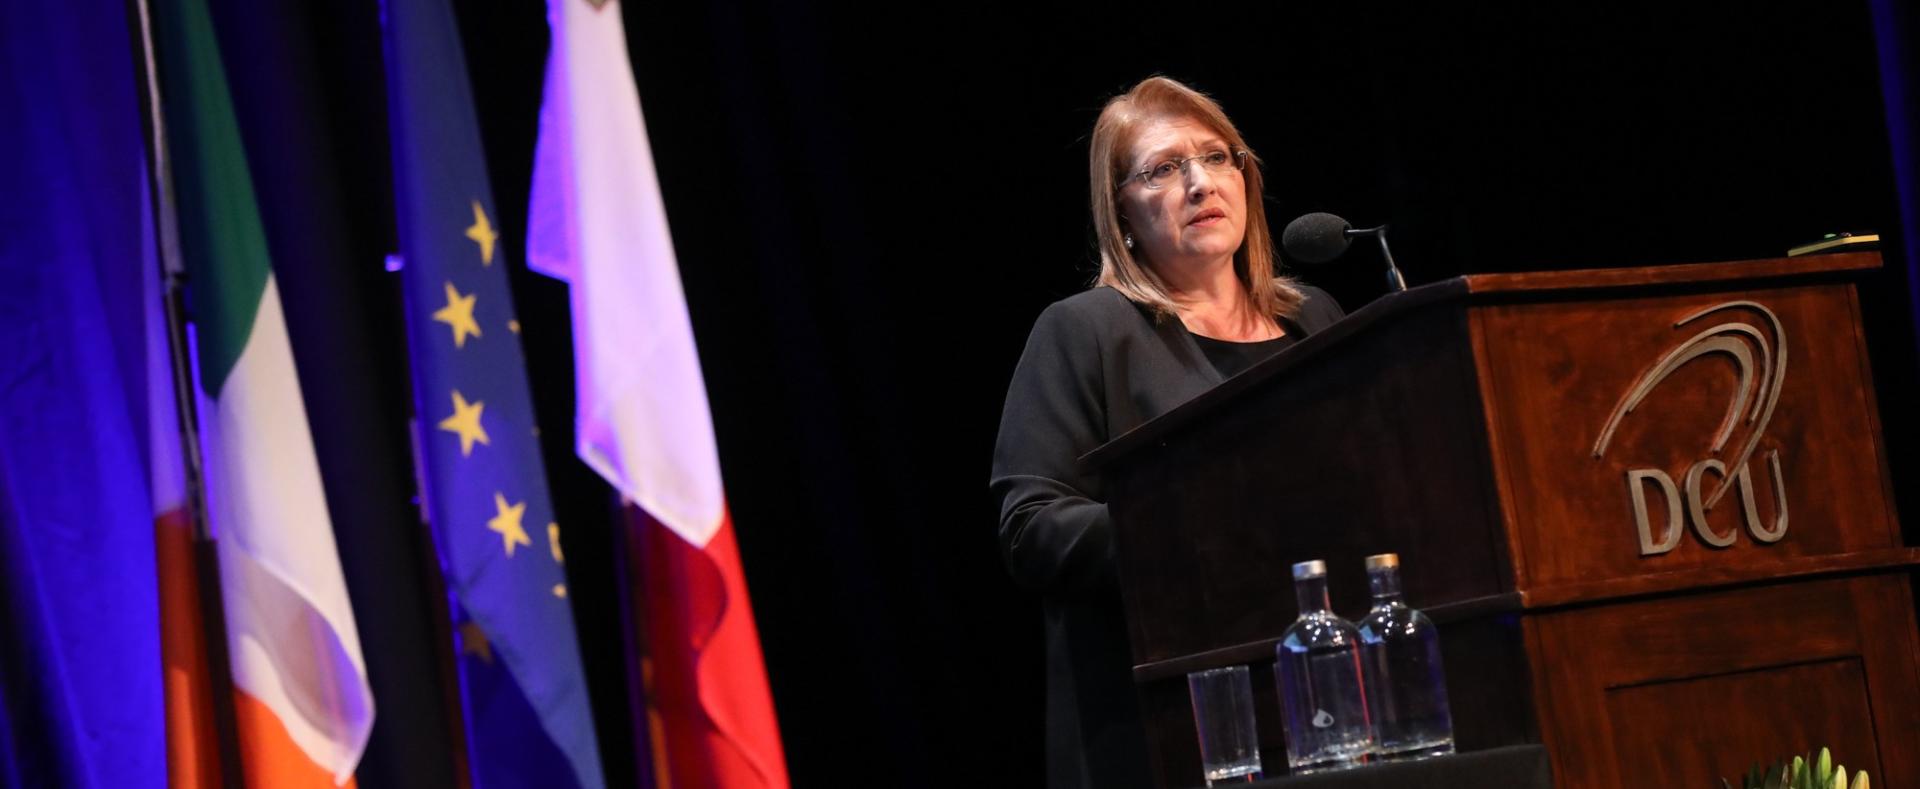 President of Malta Marie-Louise Coleiro Preca addresses a women in leadership event at DCU, February 2019.